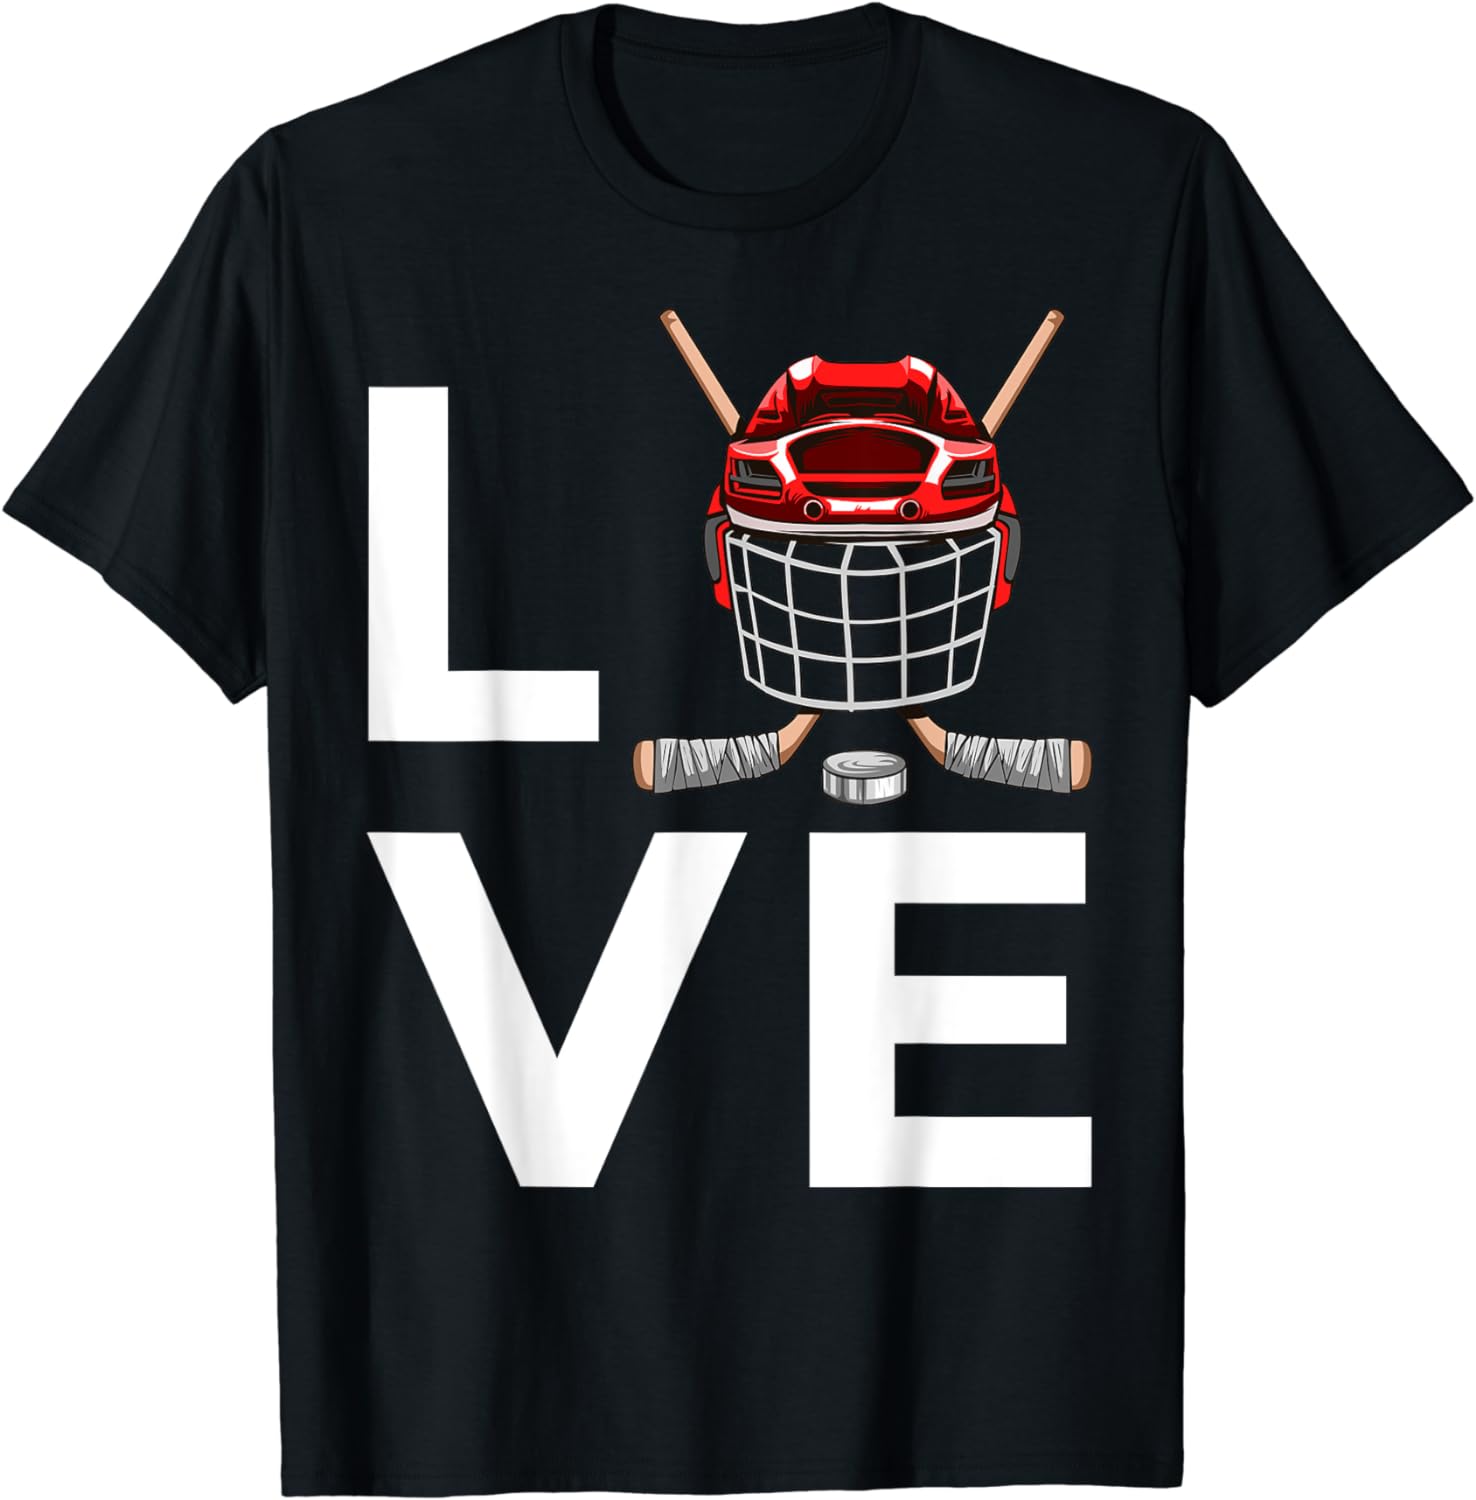 Funny Hockey Design For Men Women Ice Hockey Players T-Shirt - Walmart.com